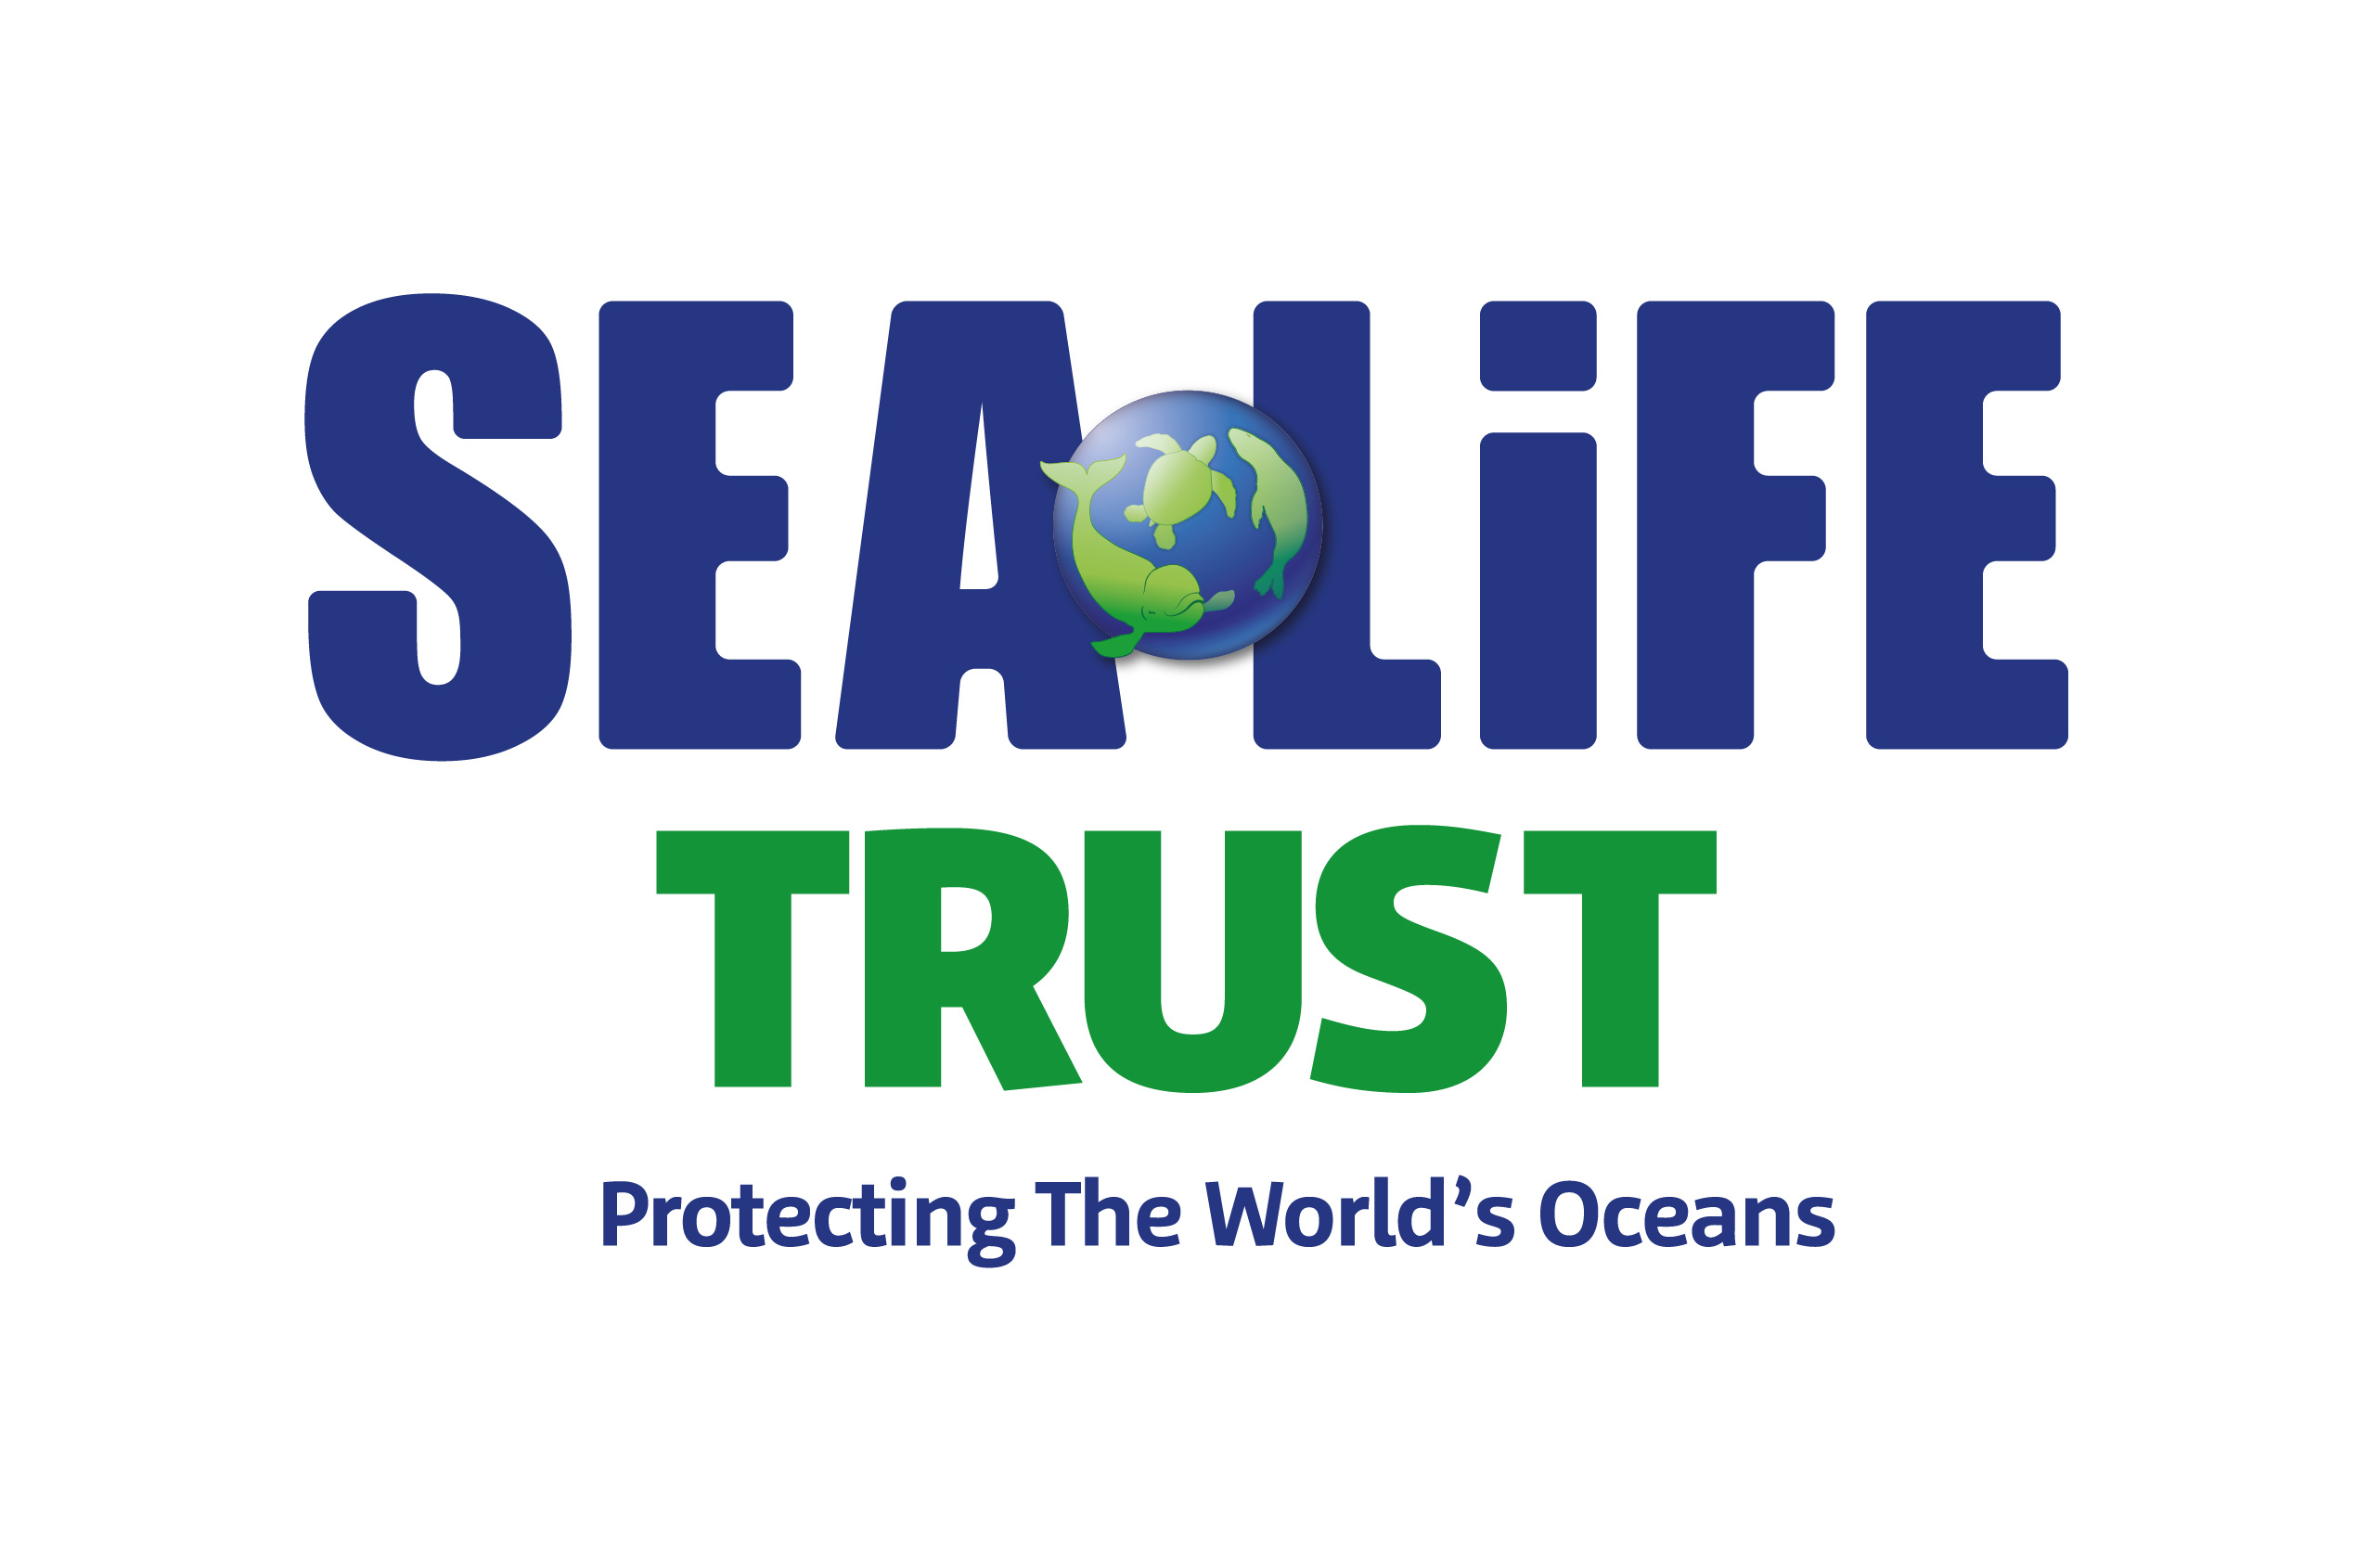 Sea Life Trust